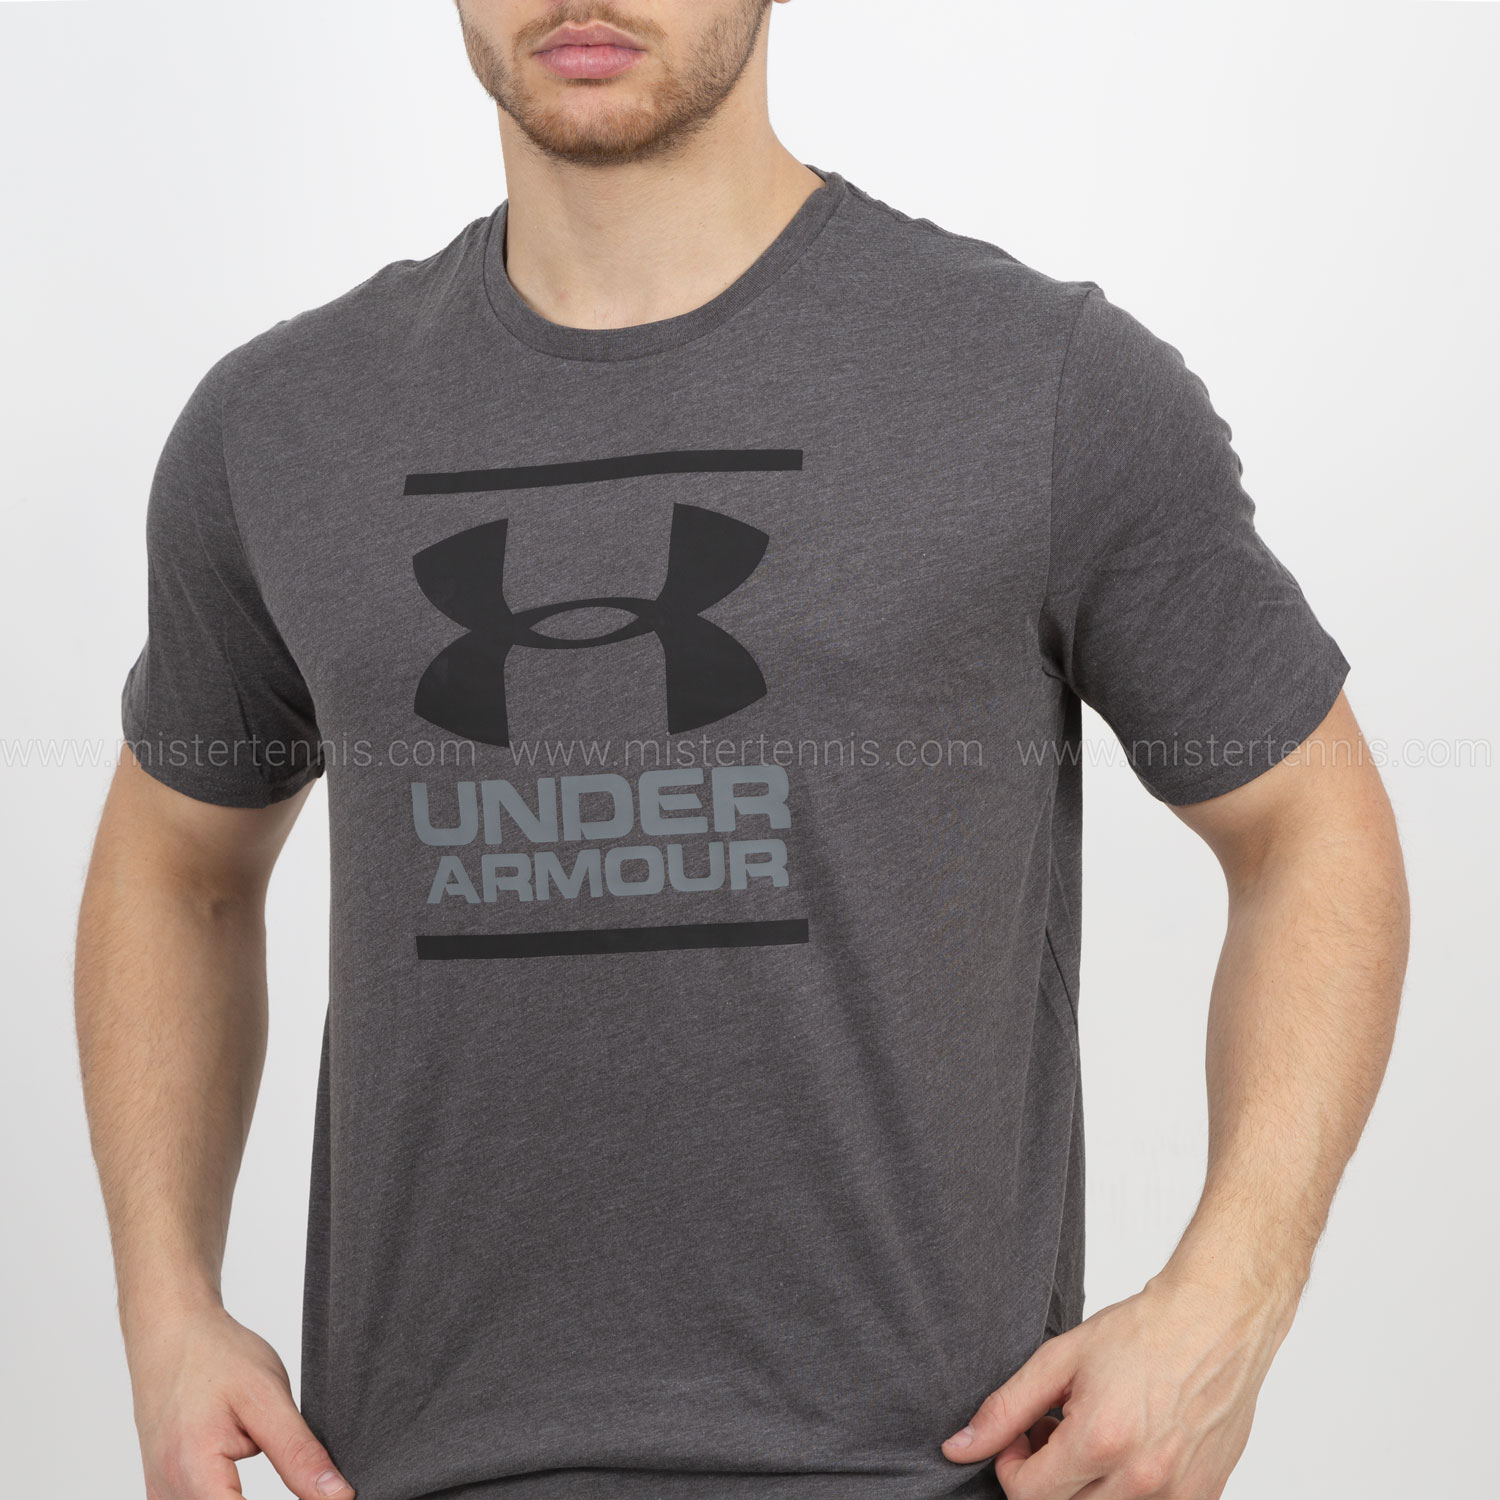 Under Armour Foundation Camiseta - Dark Grey/Black